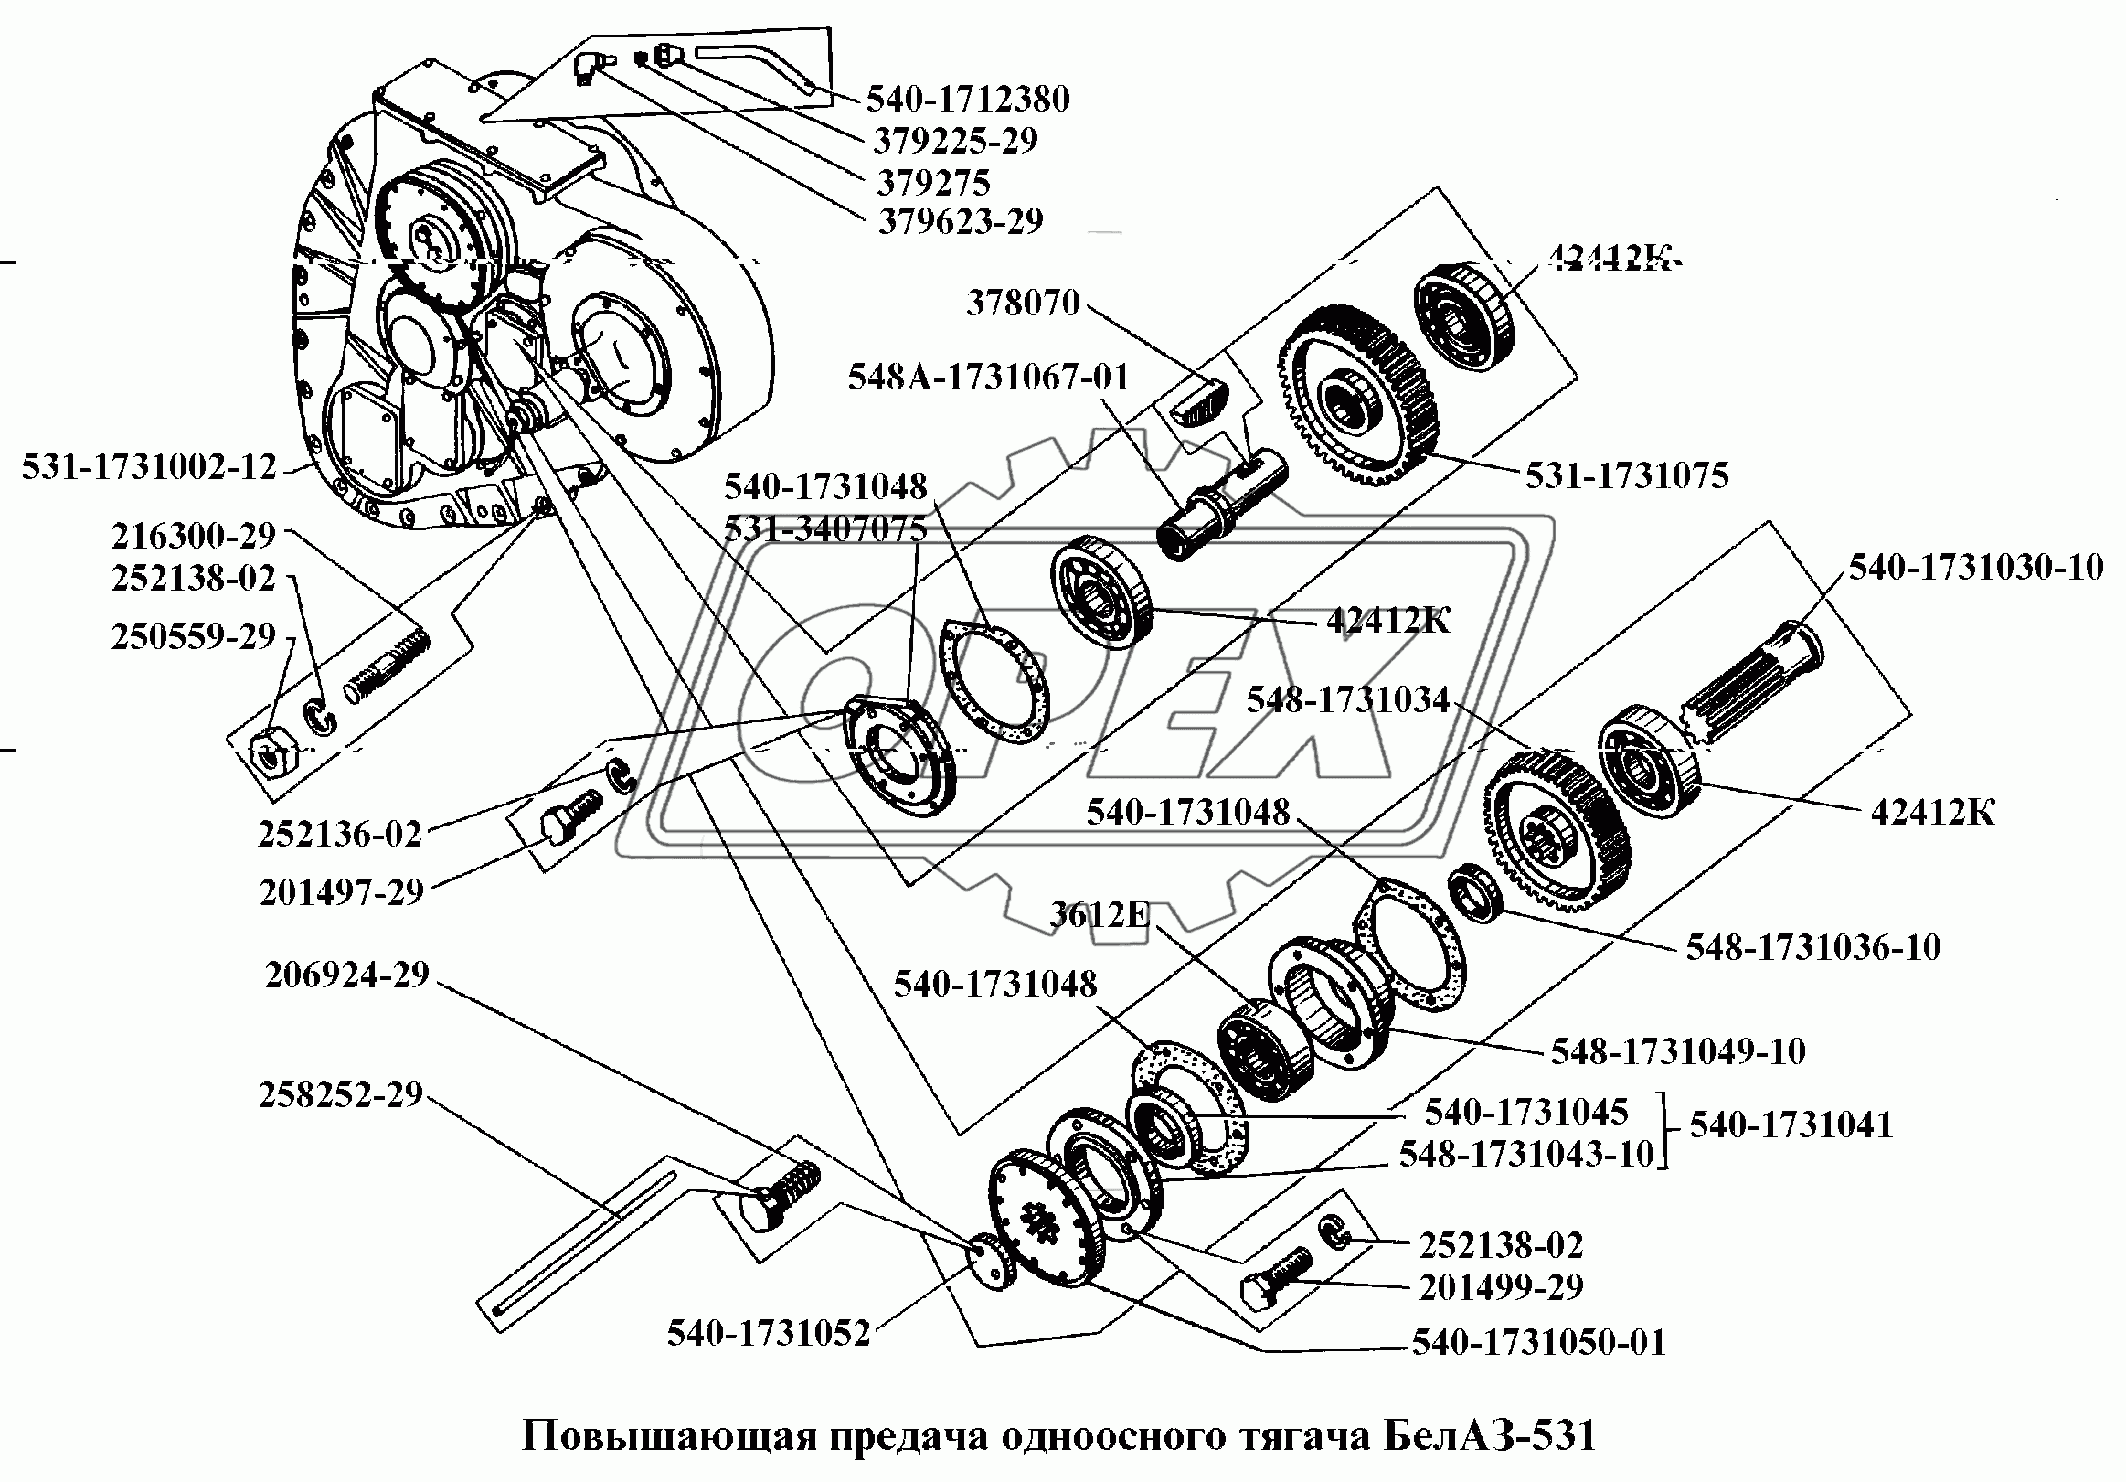 Повышающая передача одноосного тягача БелАЗ-531